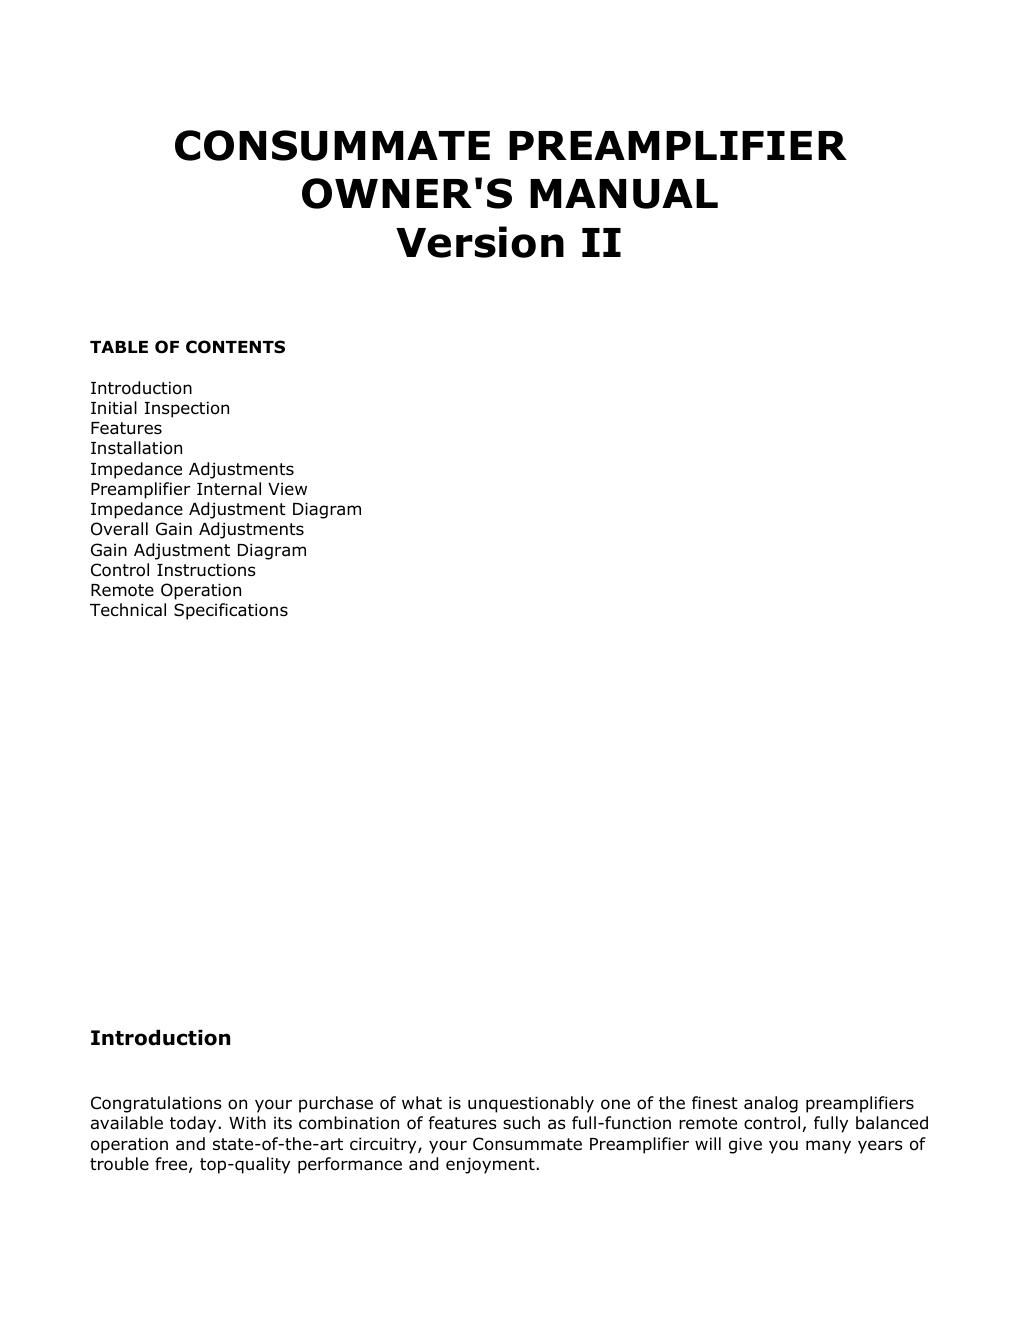 jeff rowland consummate pre mk2 owners manual